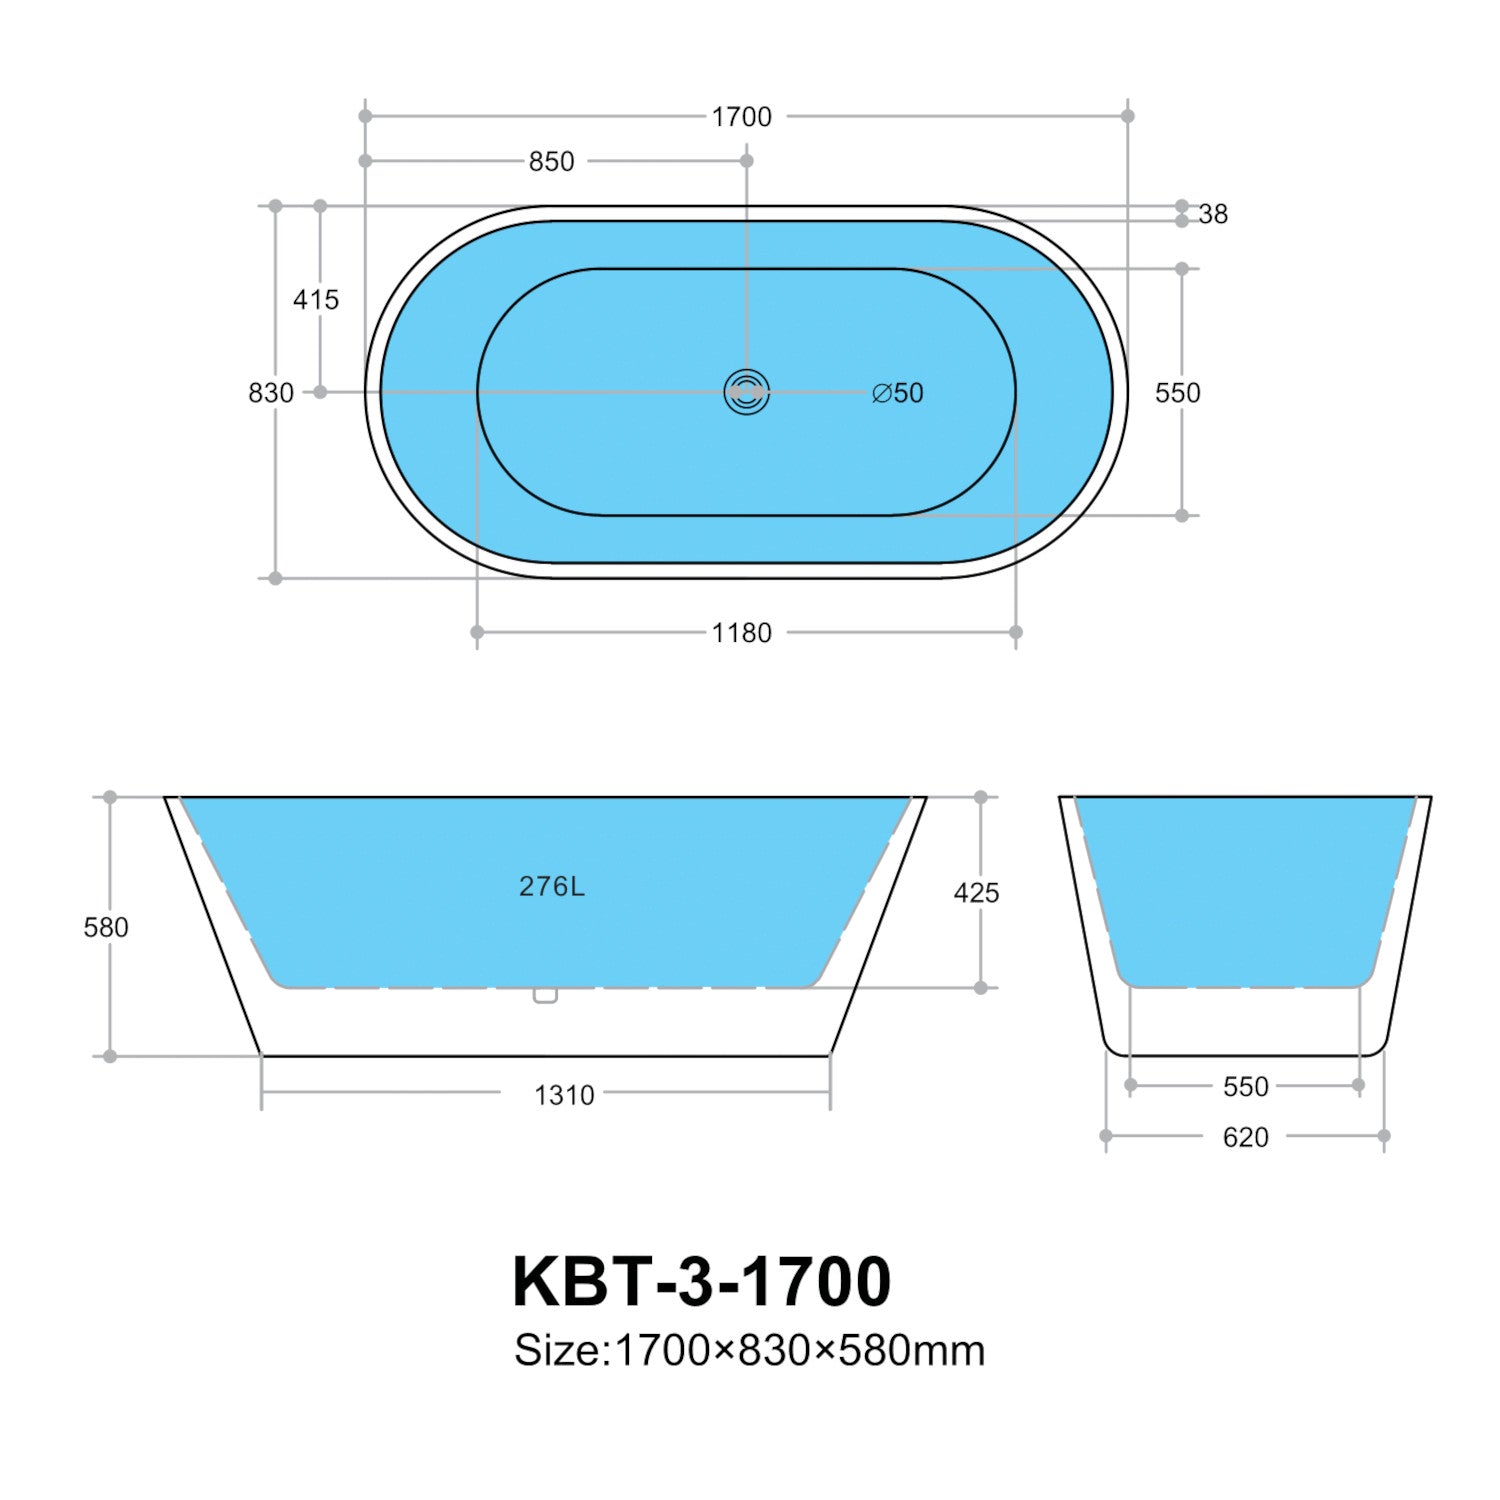 Ovia OBT1700KBT-3-1700 Bathtub: Stylish and Spacious Freestanding Tub, size